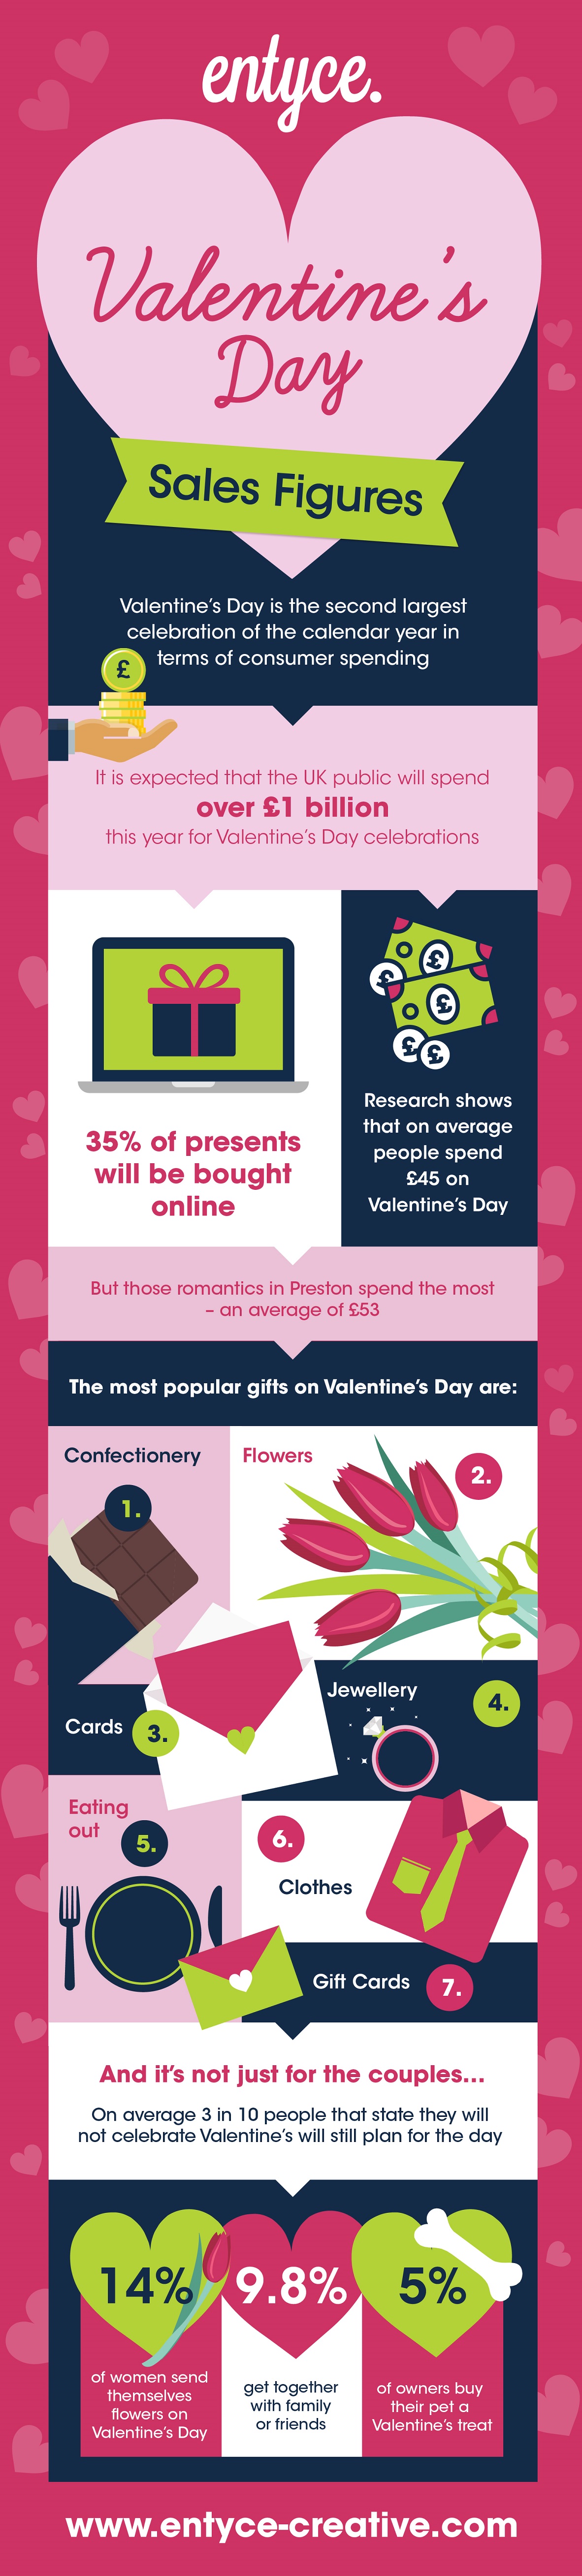 Valentine's Day statistics